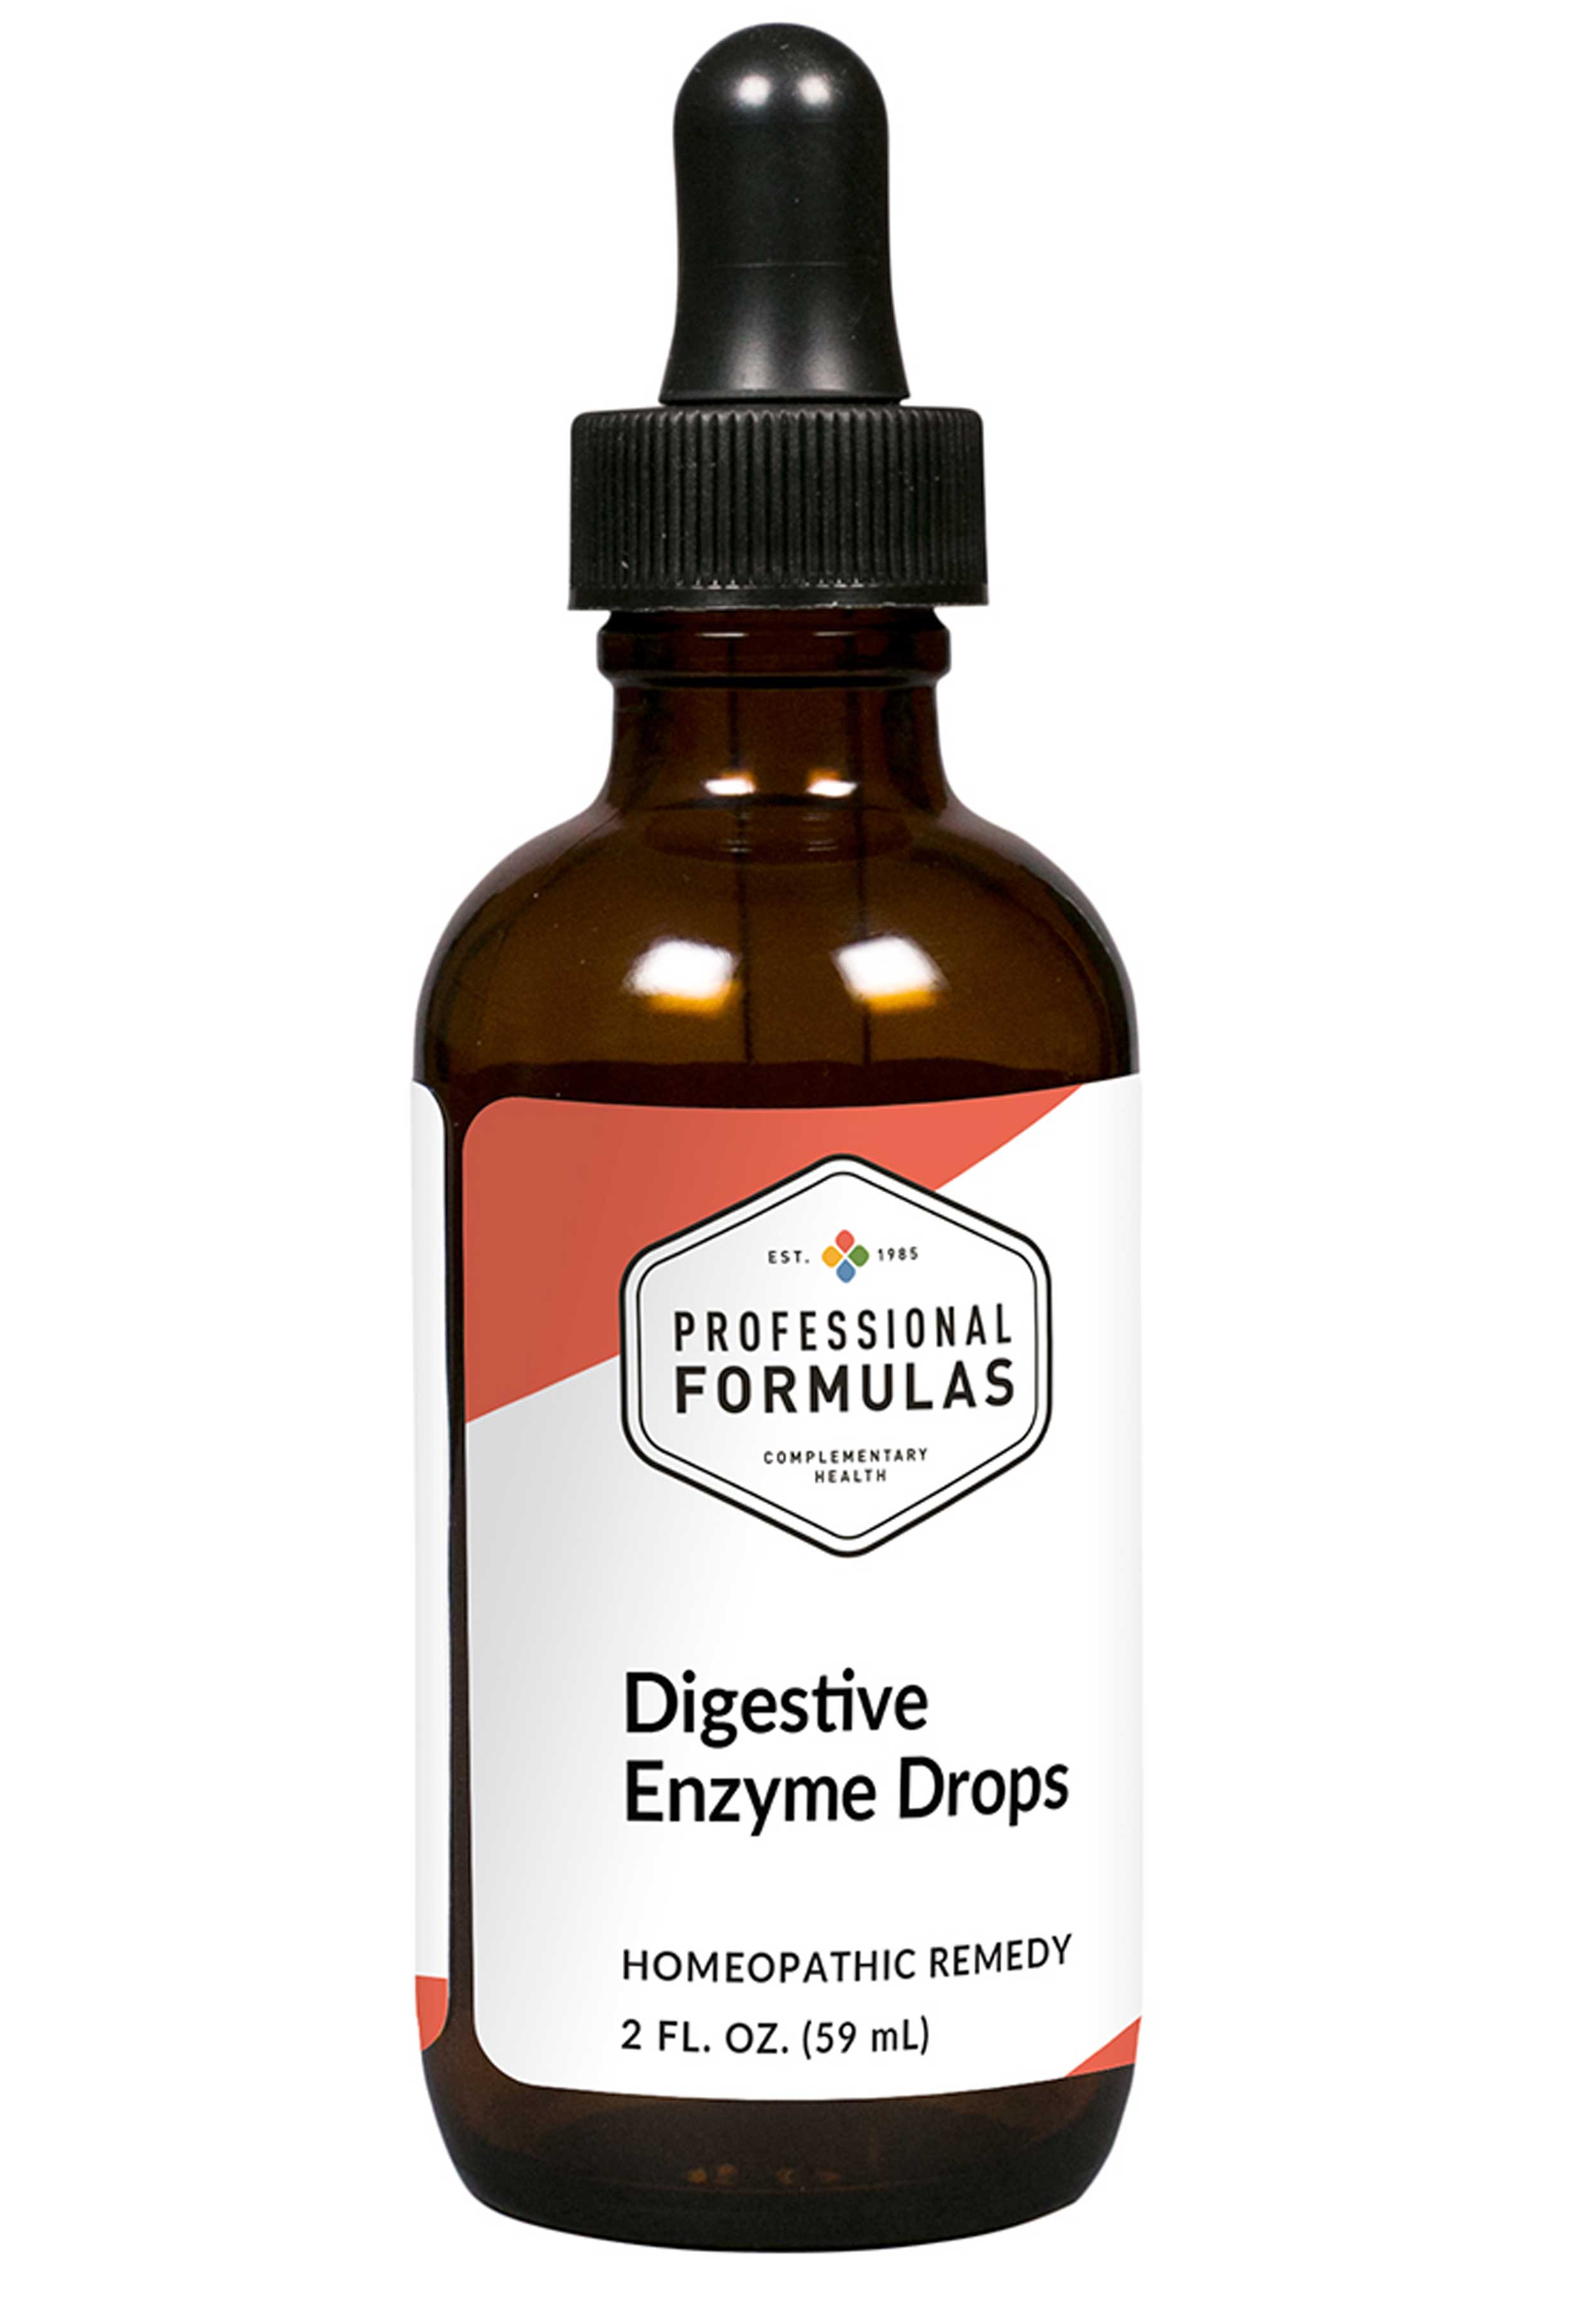 Professional Formulas Digestive Enzyme Drops